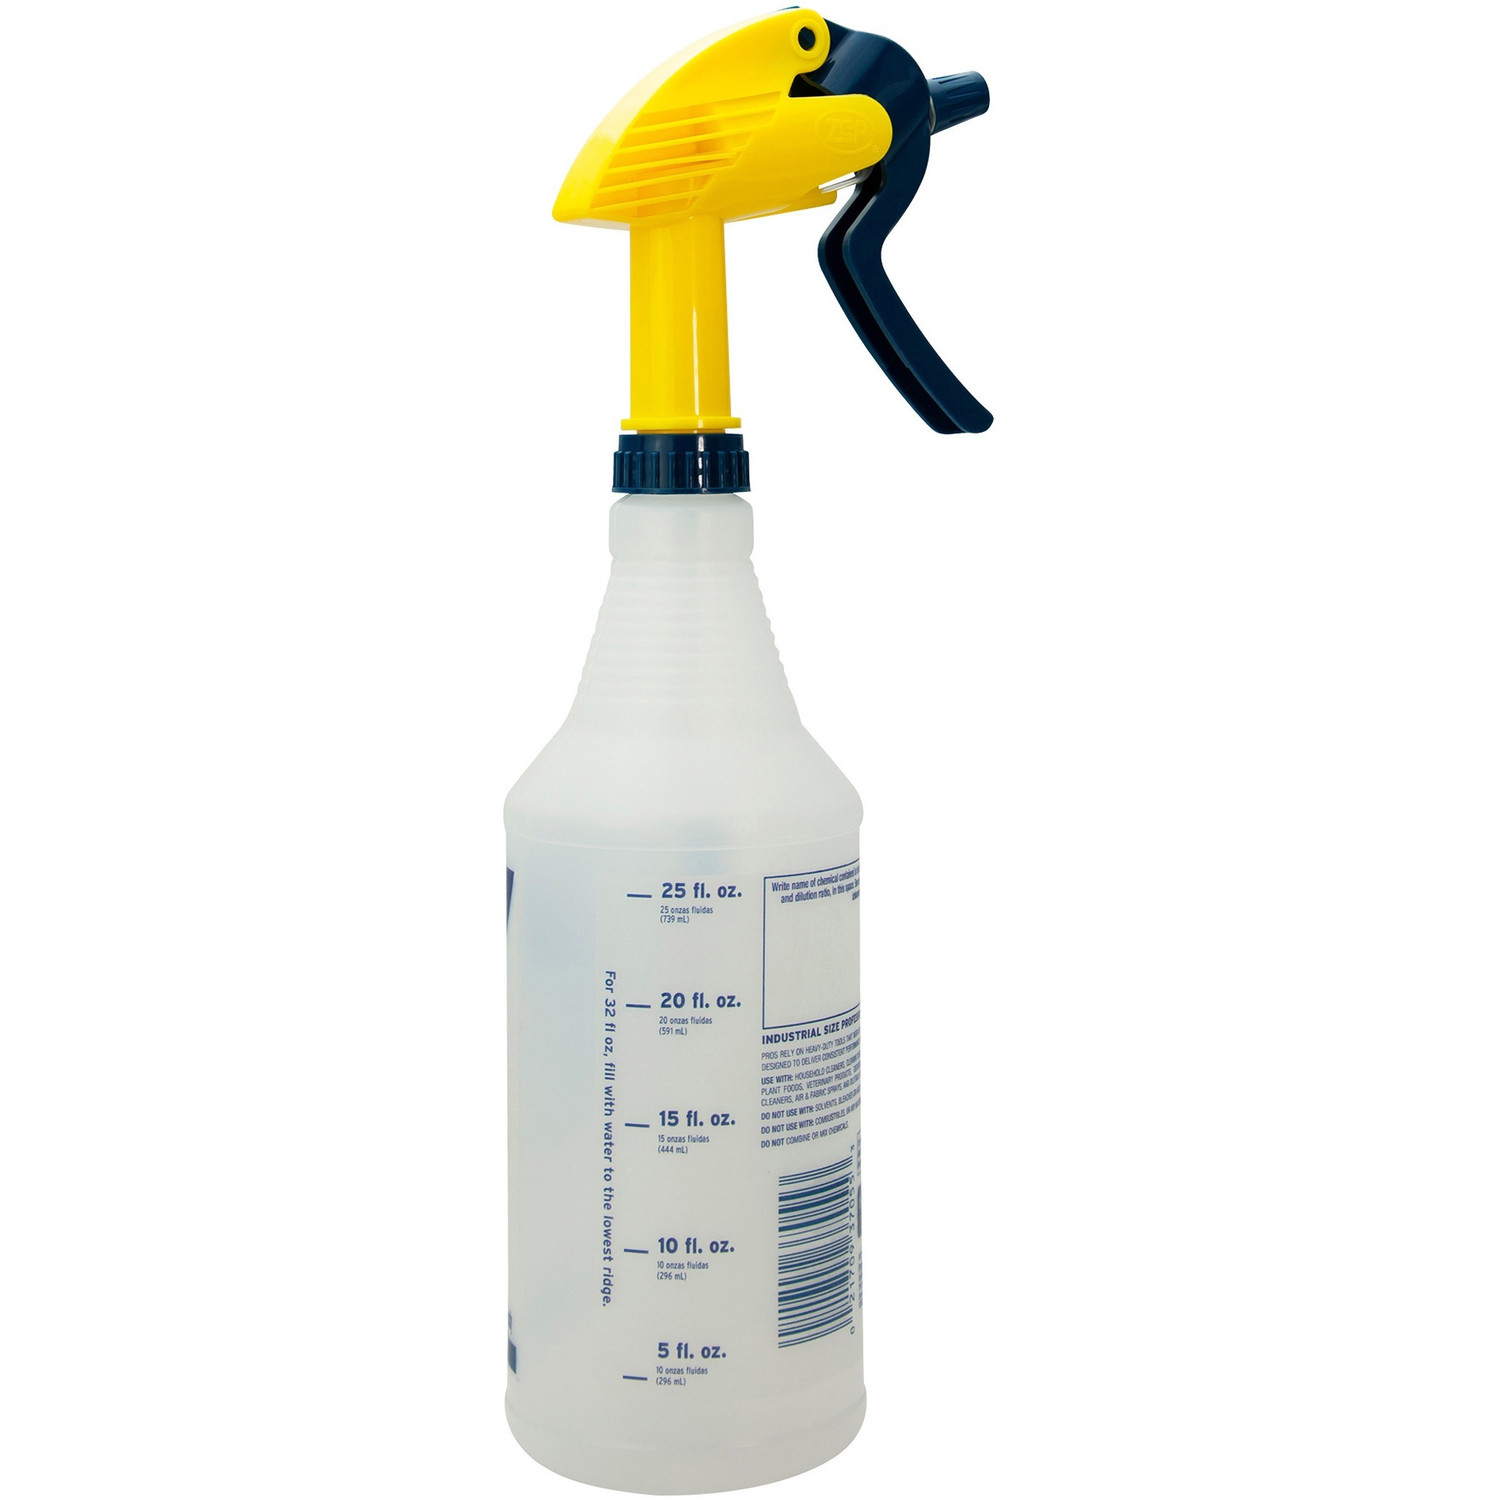 Zep Professional Spray Bottle, 32 oz, Blue, Gold Clear, 36/Carton